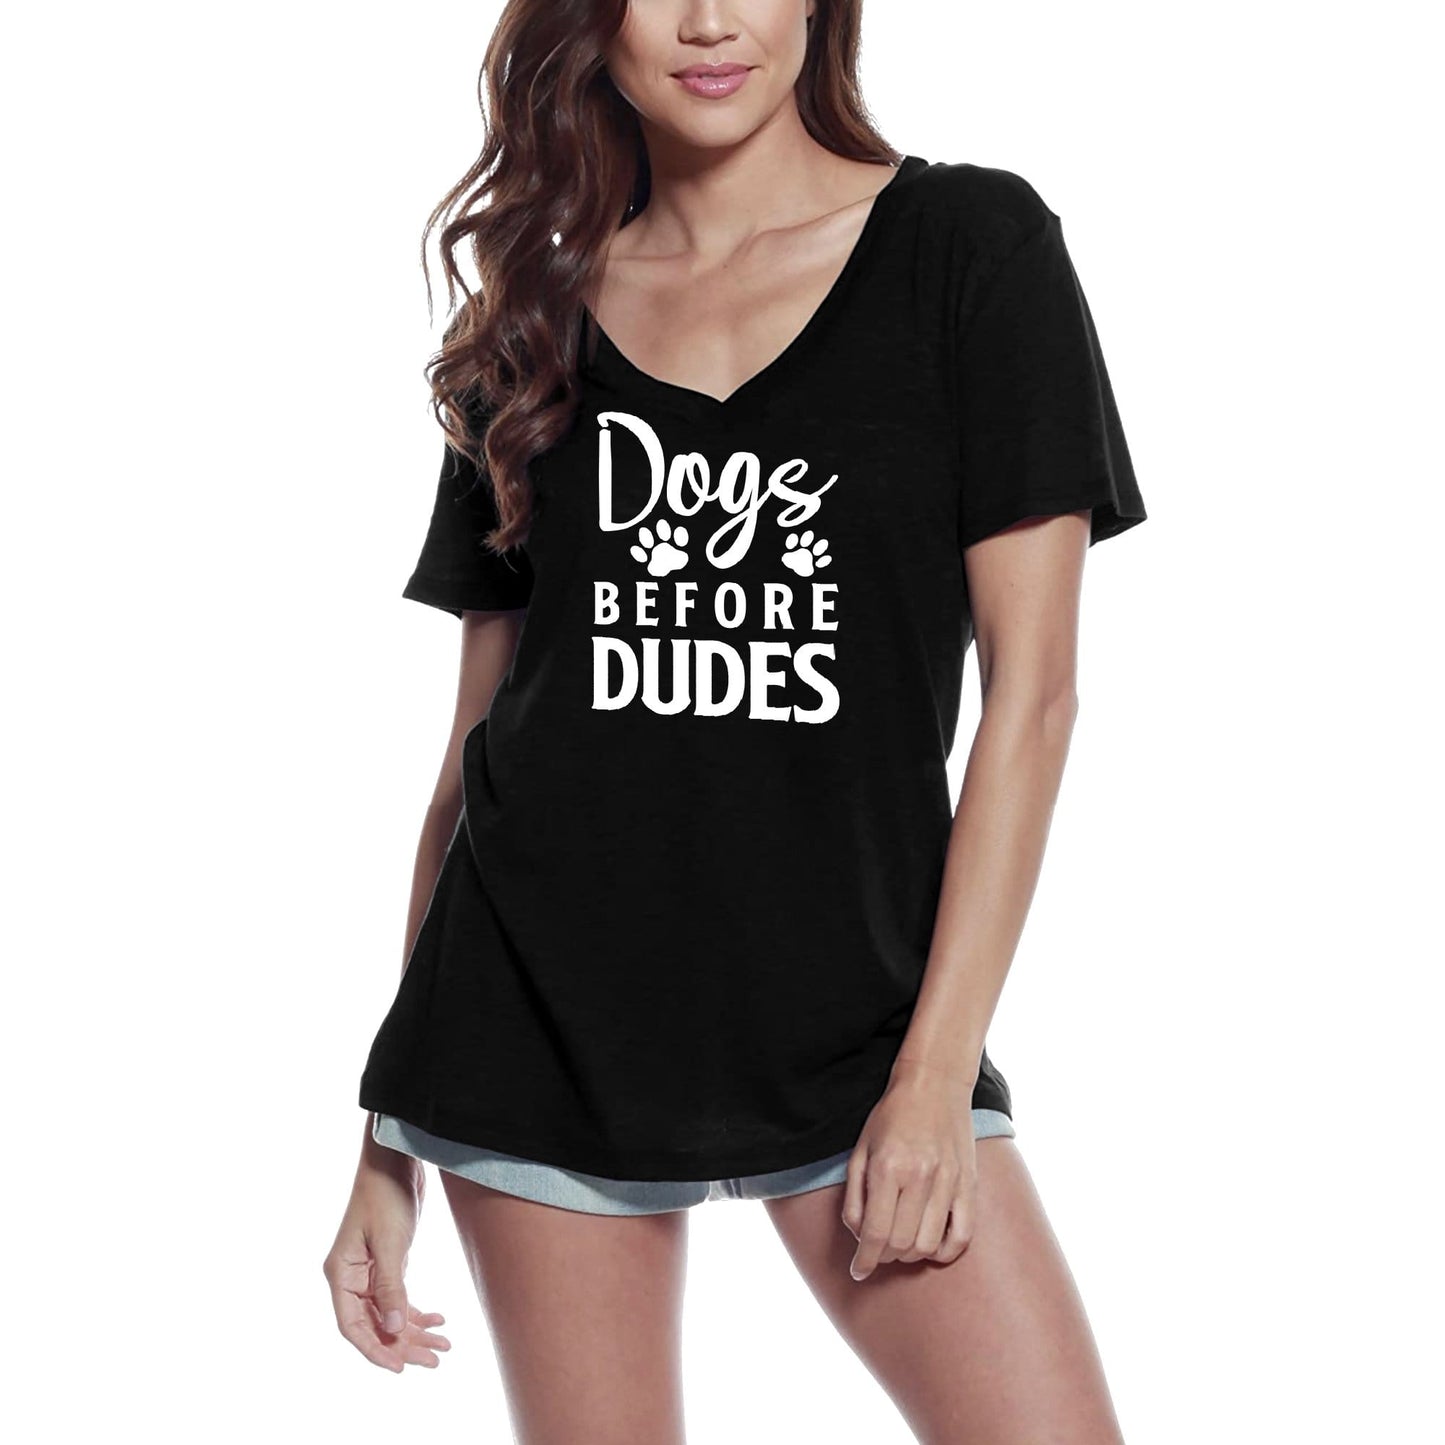 ULTRABASIC Women's T-Shirt Dogs Before Dudes - Funny Short Sleeve Tee Shirt Tops